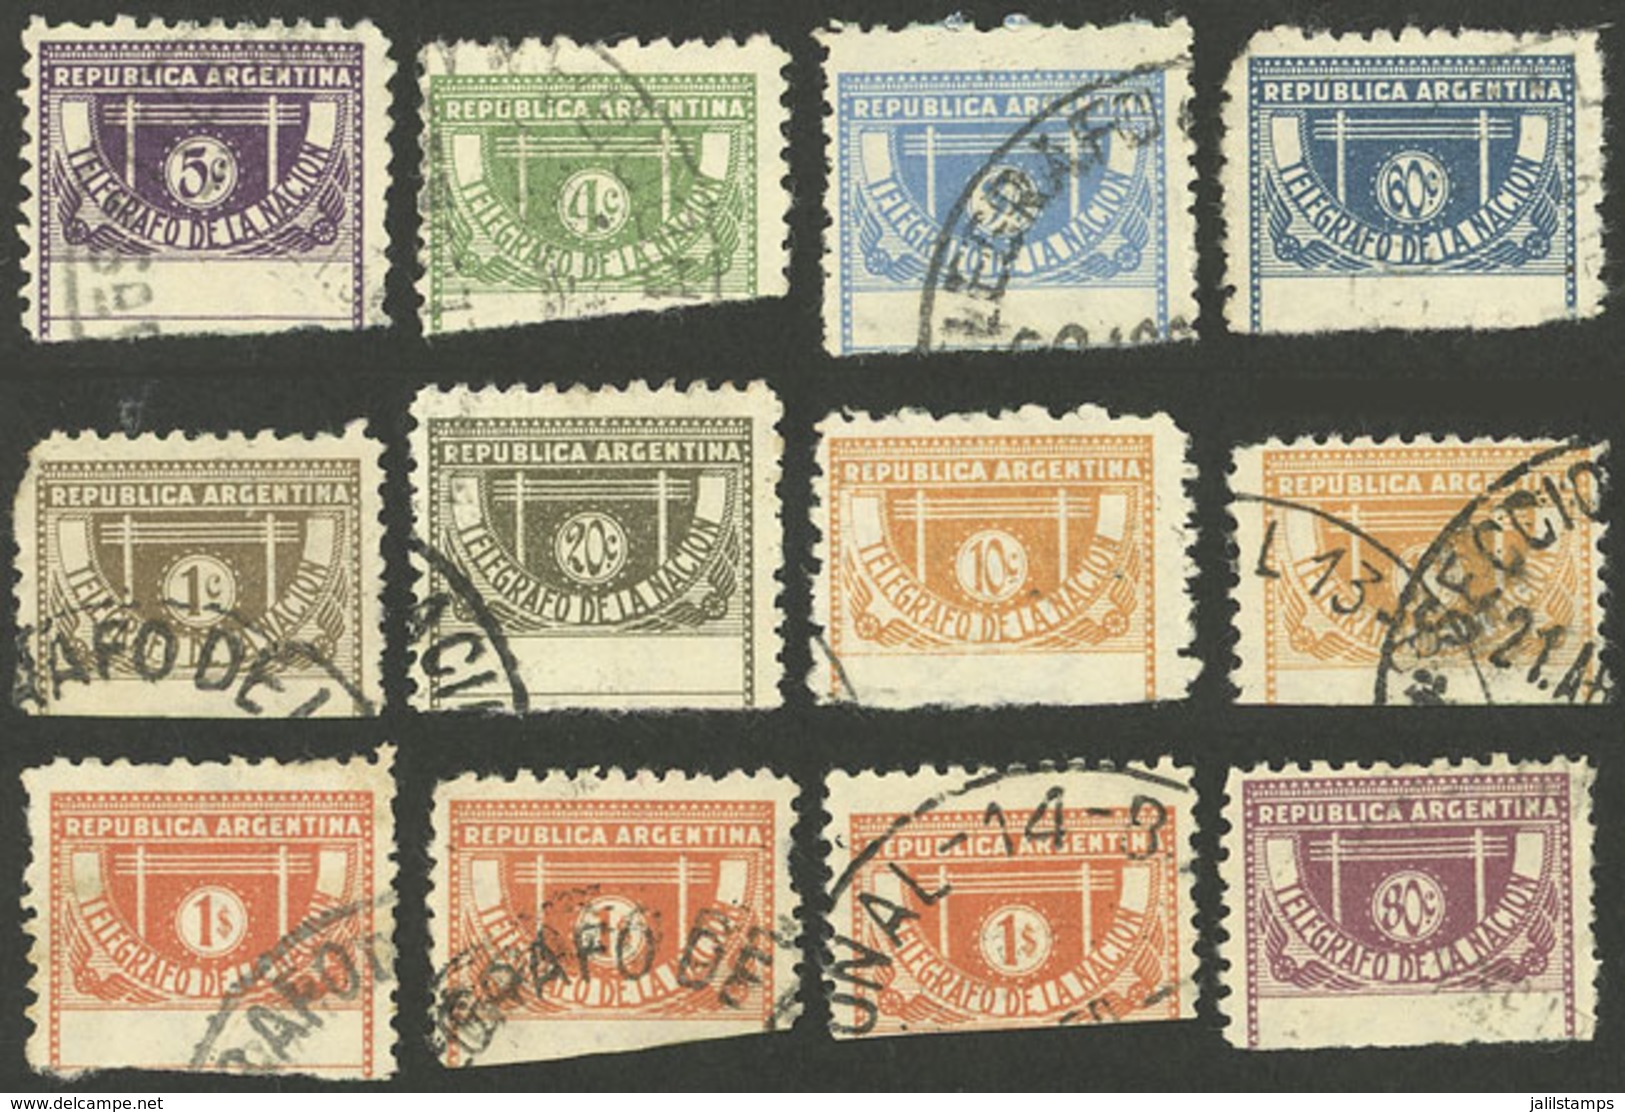 ARGENTINA: 10 Used Stamps Of Telégrafo De La Nación, Different Values, VF Quality - Telegraph